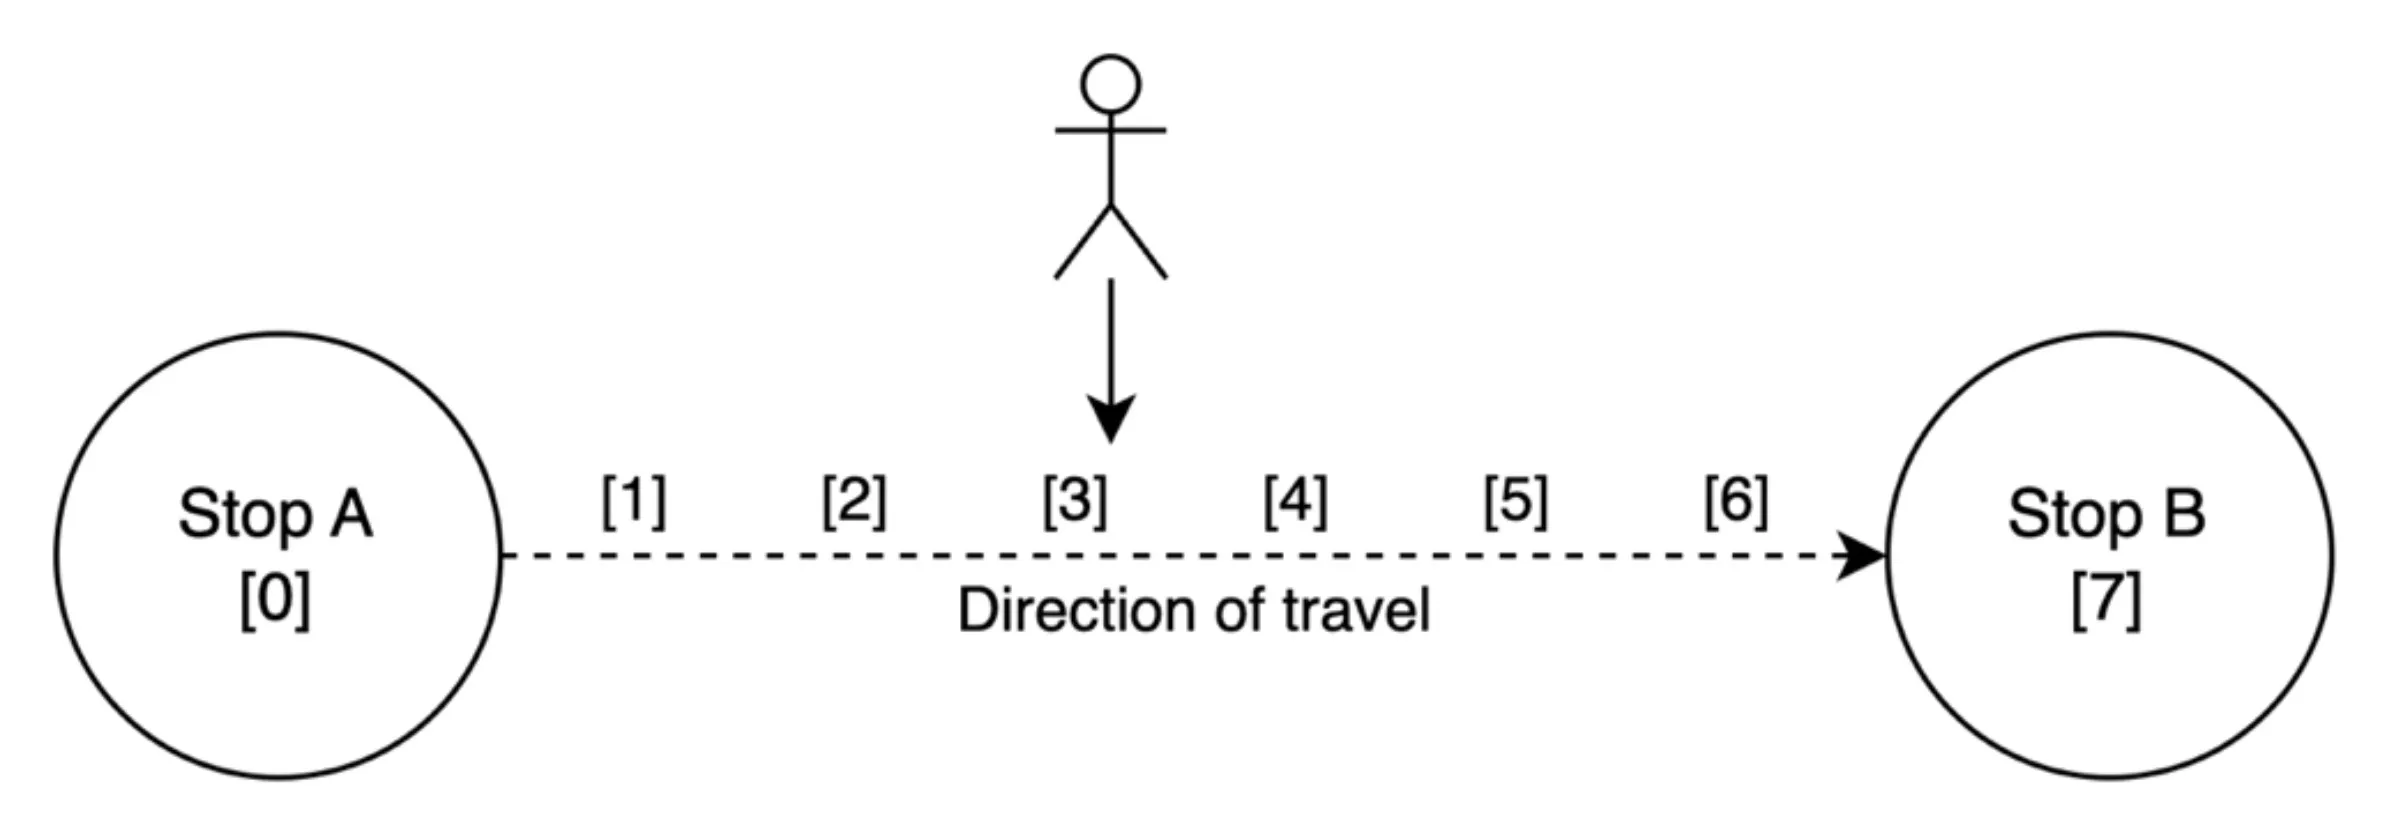 Diagram showing nearest stop solution